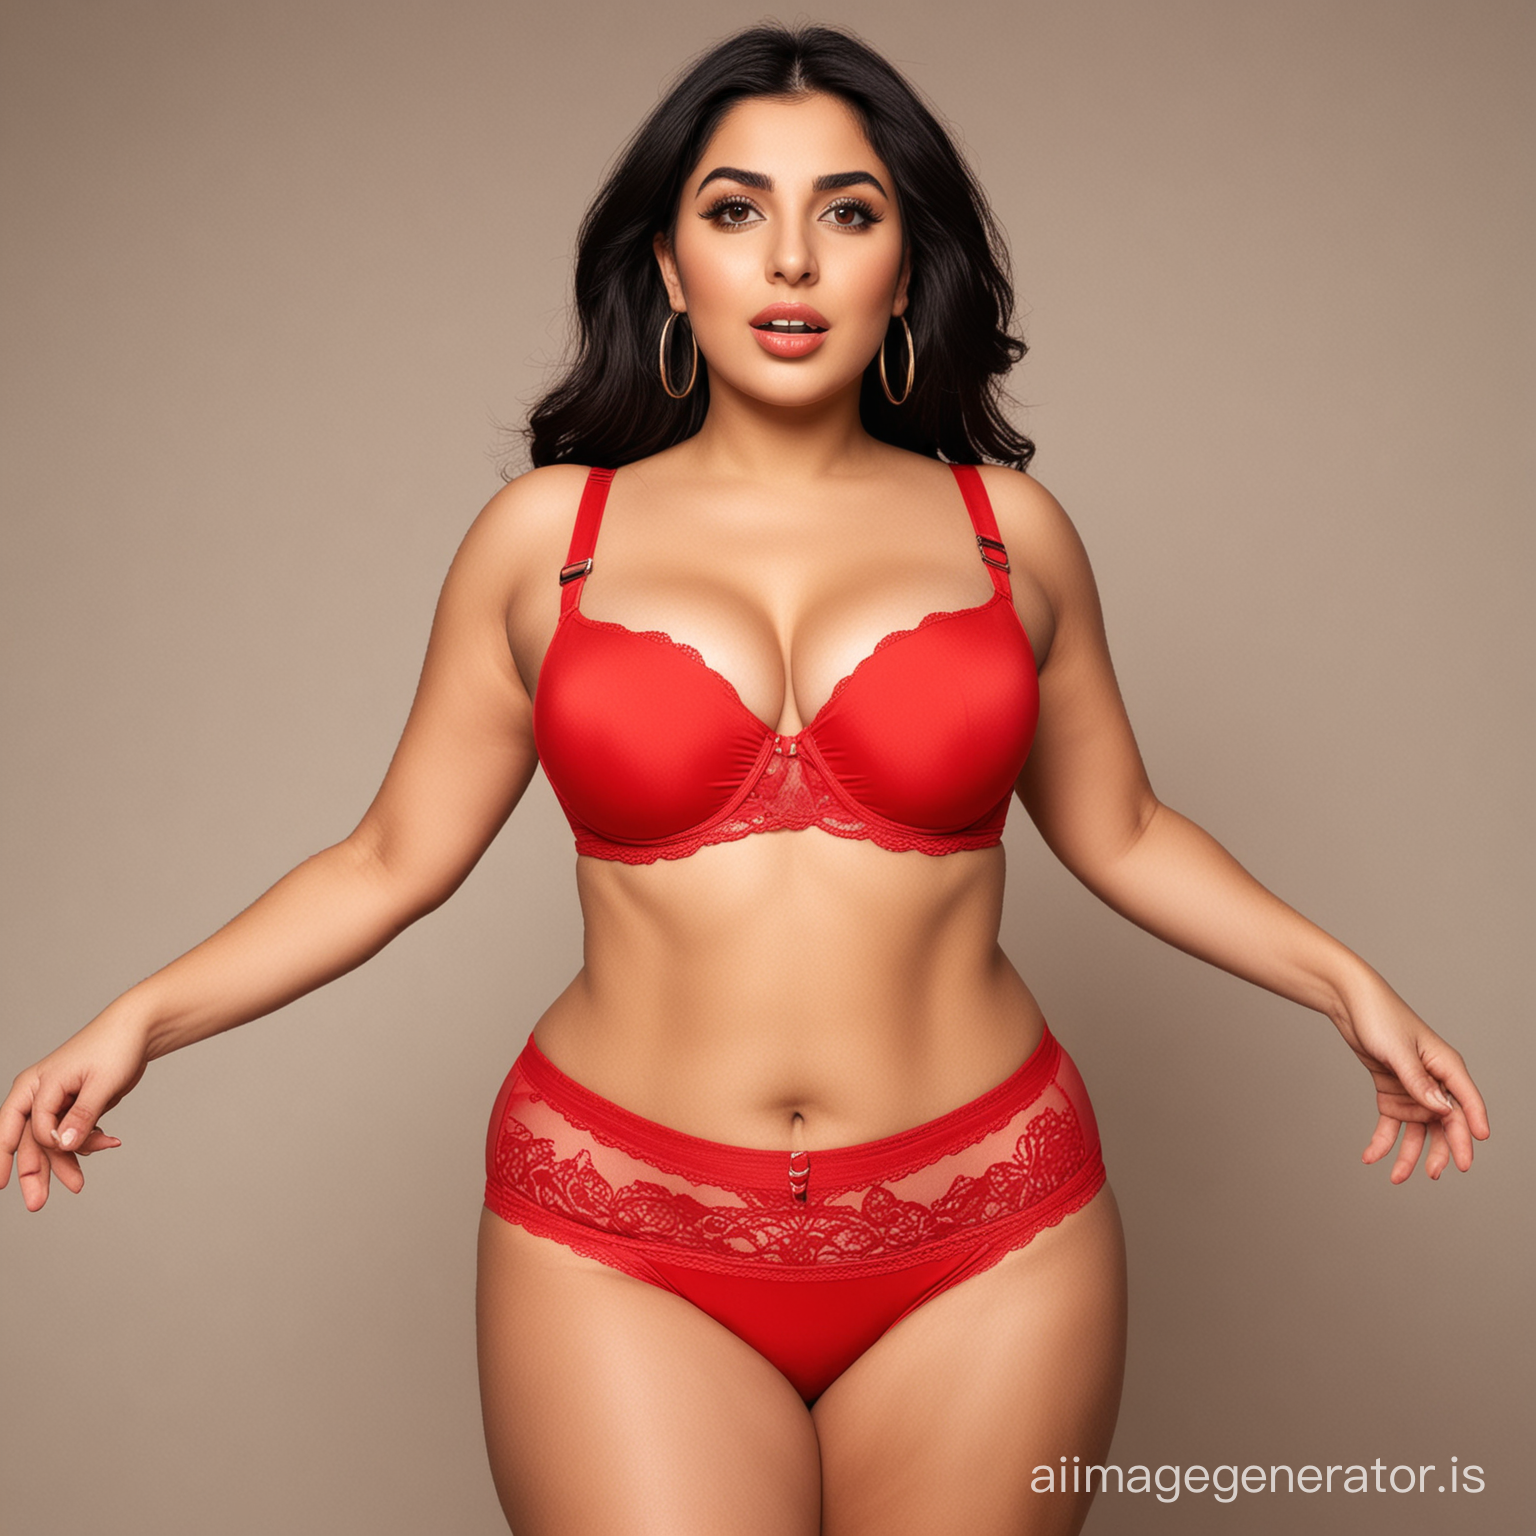 Arab woman in bra, red high waisted underwear big hips 